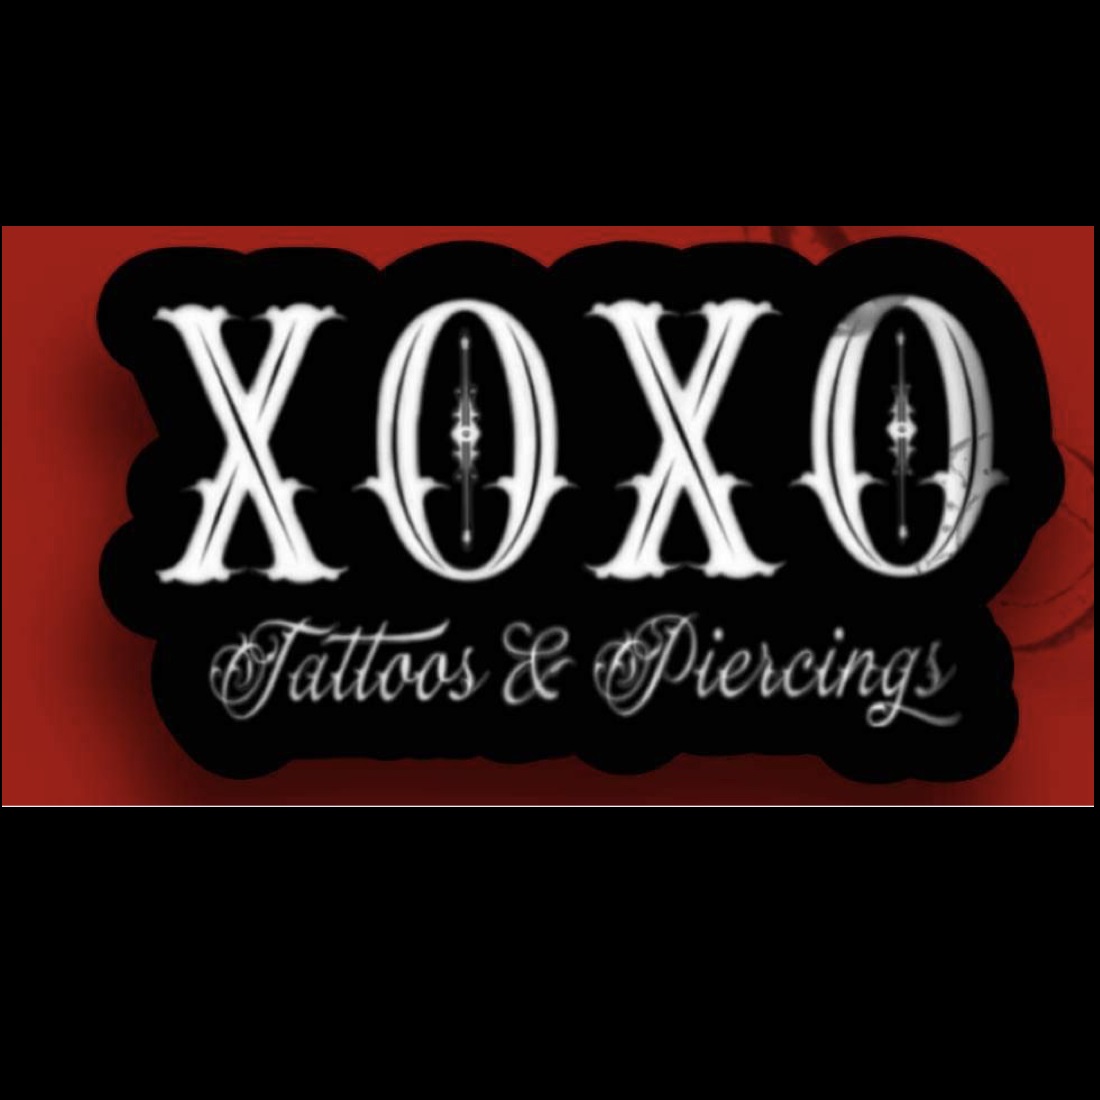 Xoxo Tattoo Shop